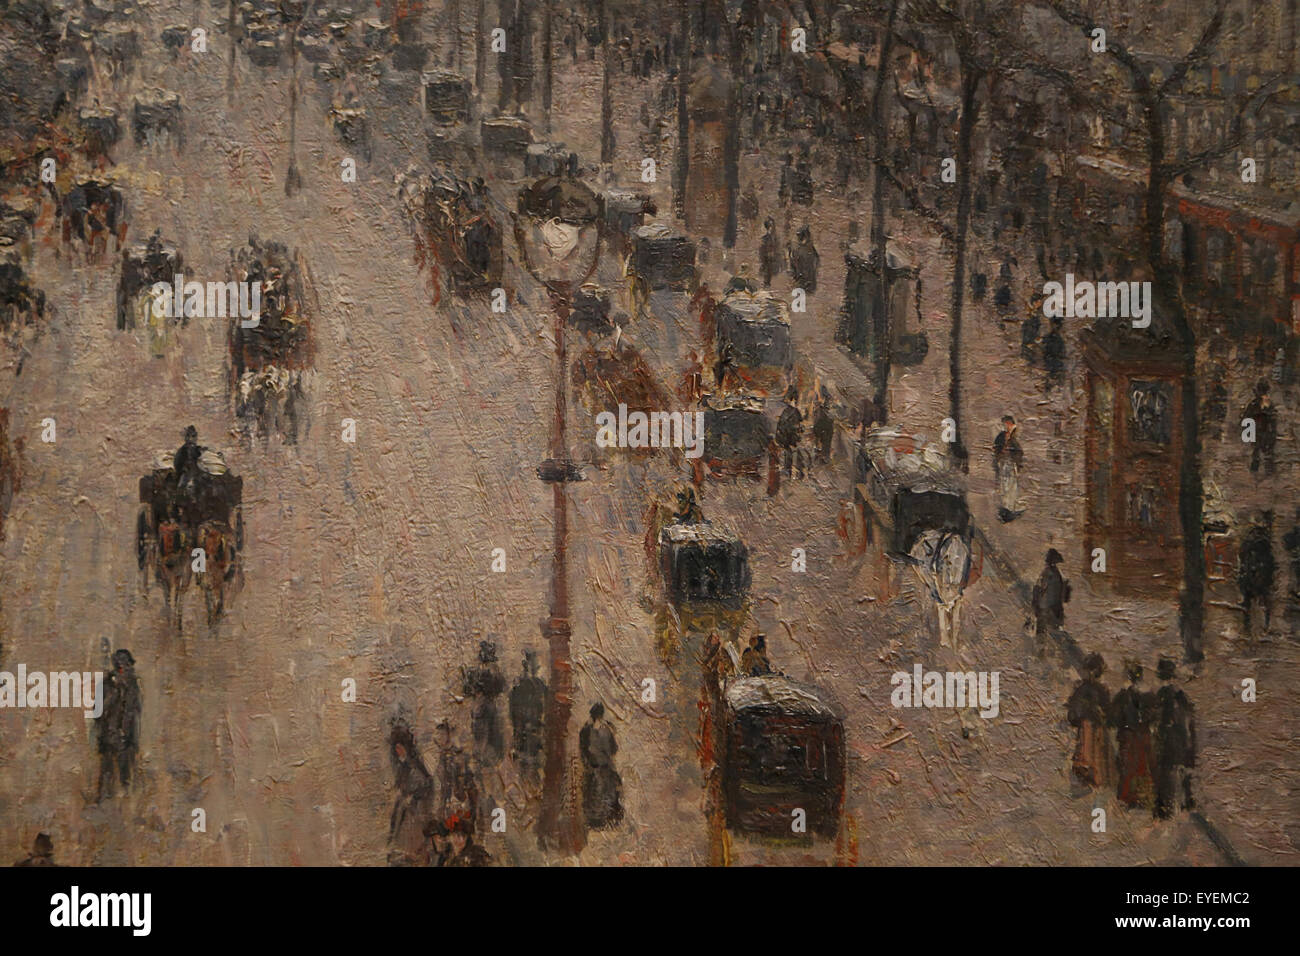 Camille Pissarro (1830-1903). El pintor francés. El Boulevard Montmartre, en una mañana de invierno de 1897. Óleo sobre lienzo. Mu metropolitana Foto de stock